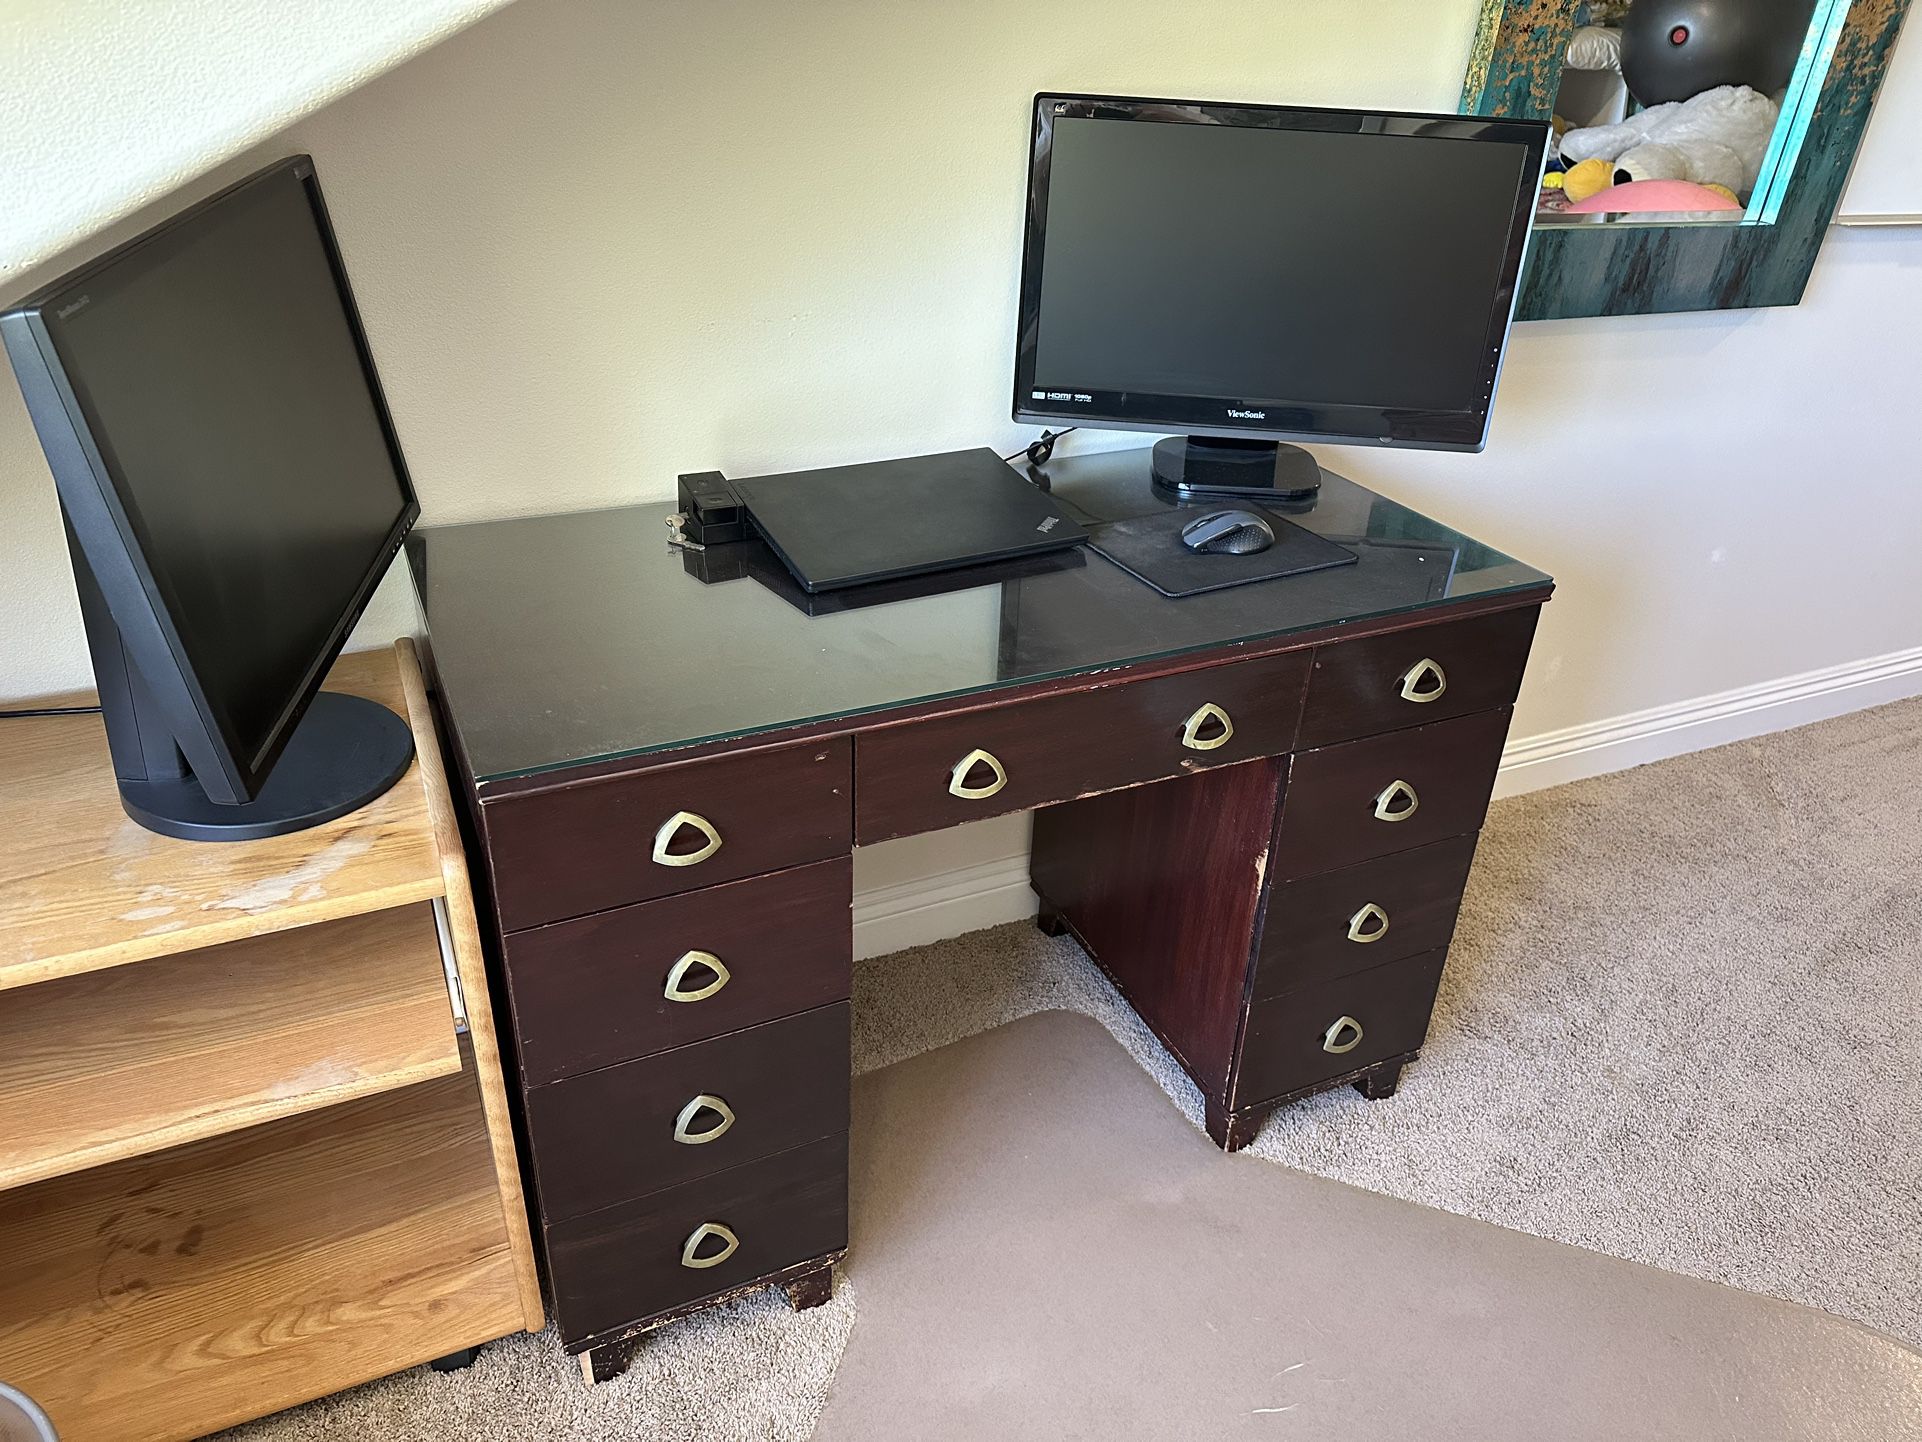 Desk (9 Drawers - A Ton Of Storage)